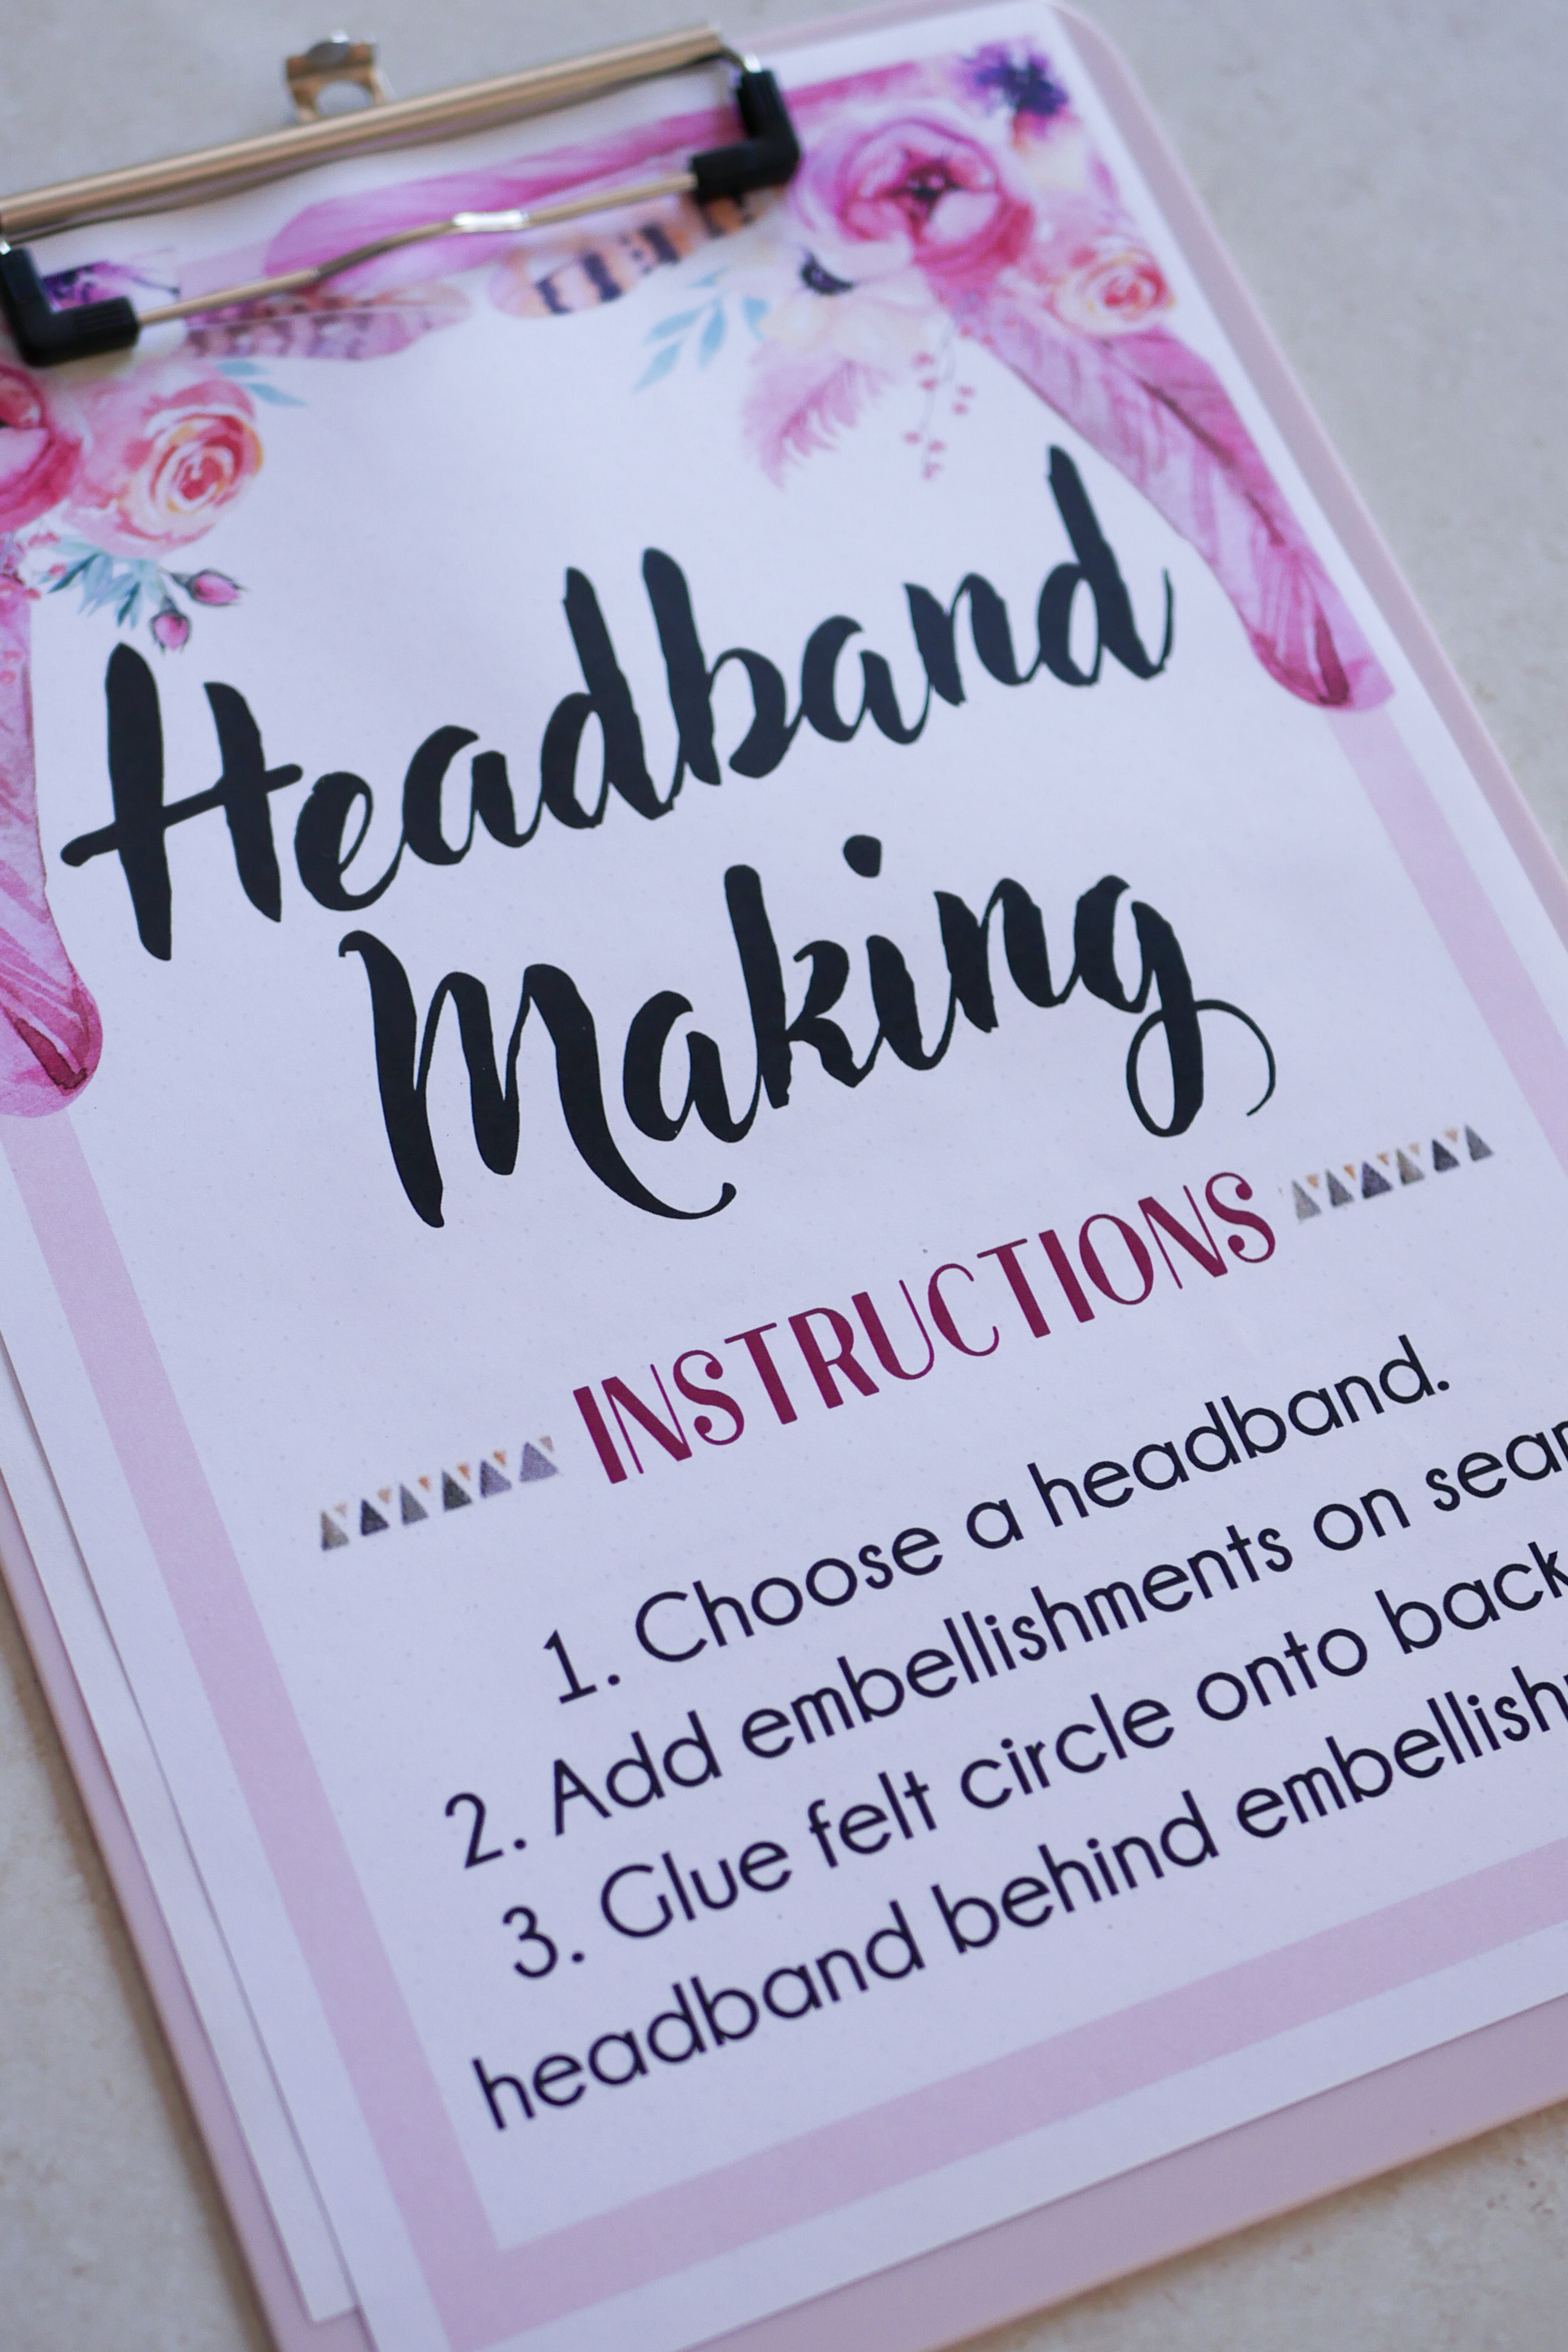 Headband Making Station Instruction Sheet 1